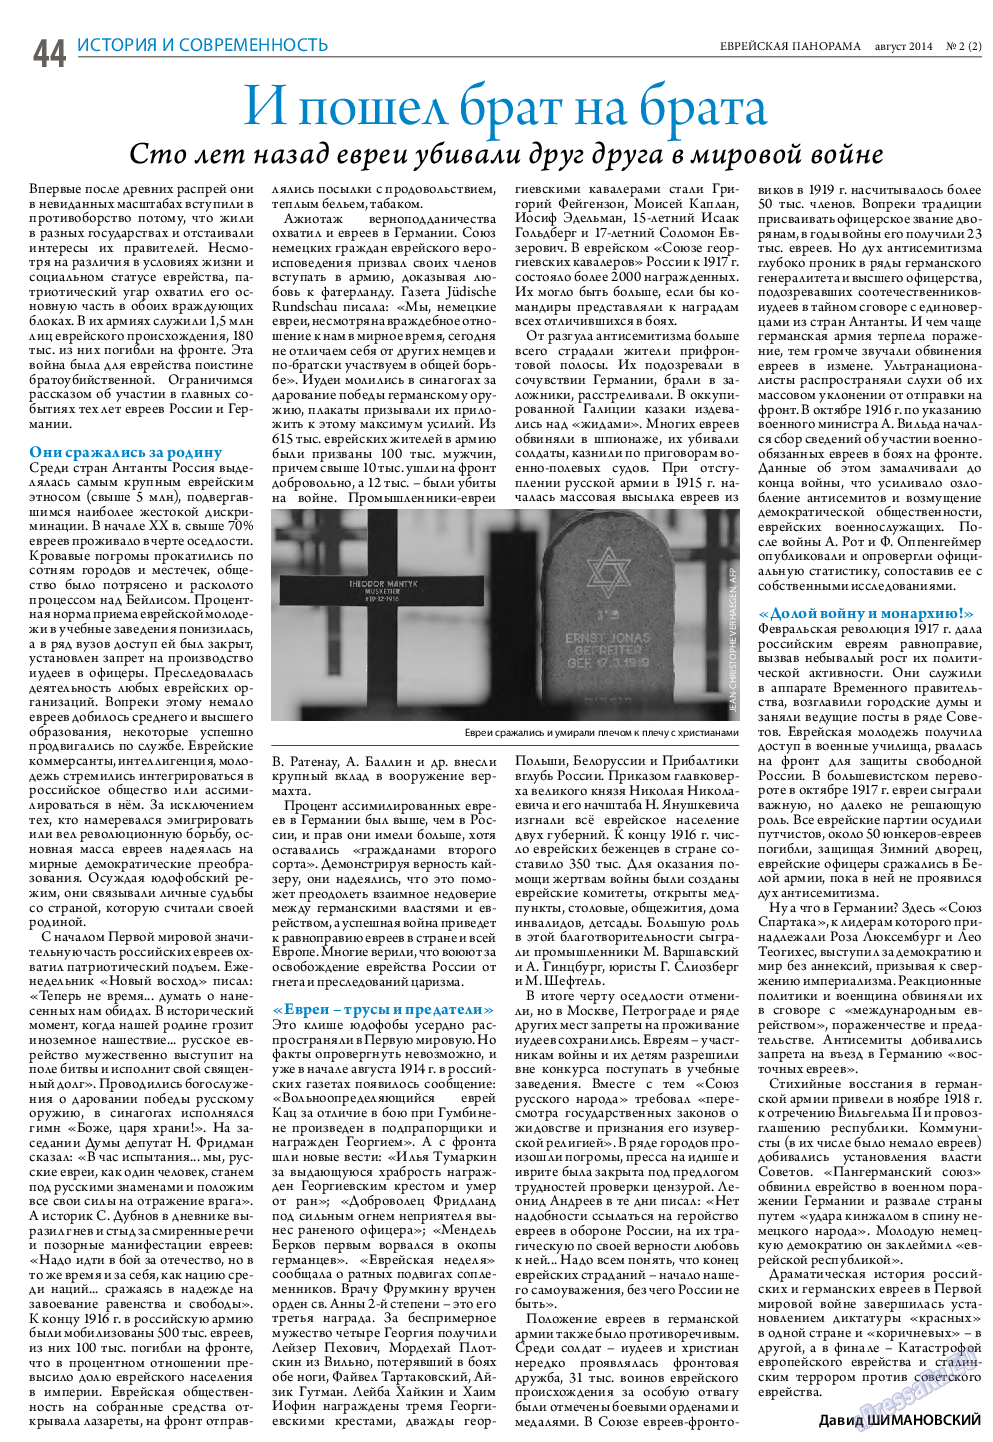 Еврейская панорама, газета. 2014 №2 стр.44